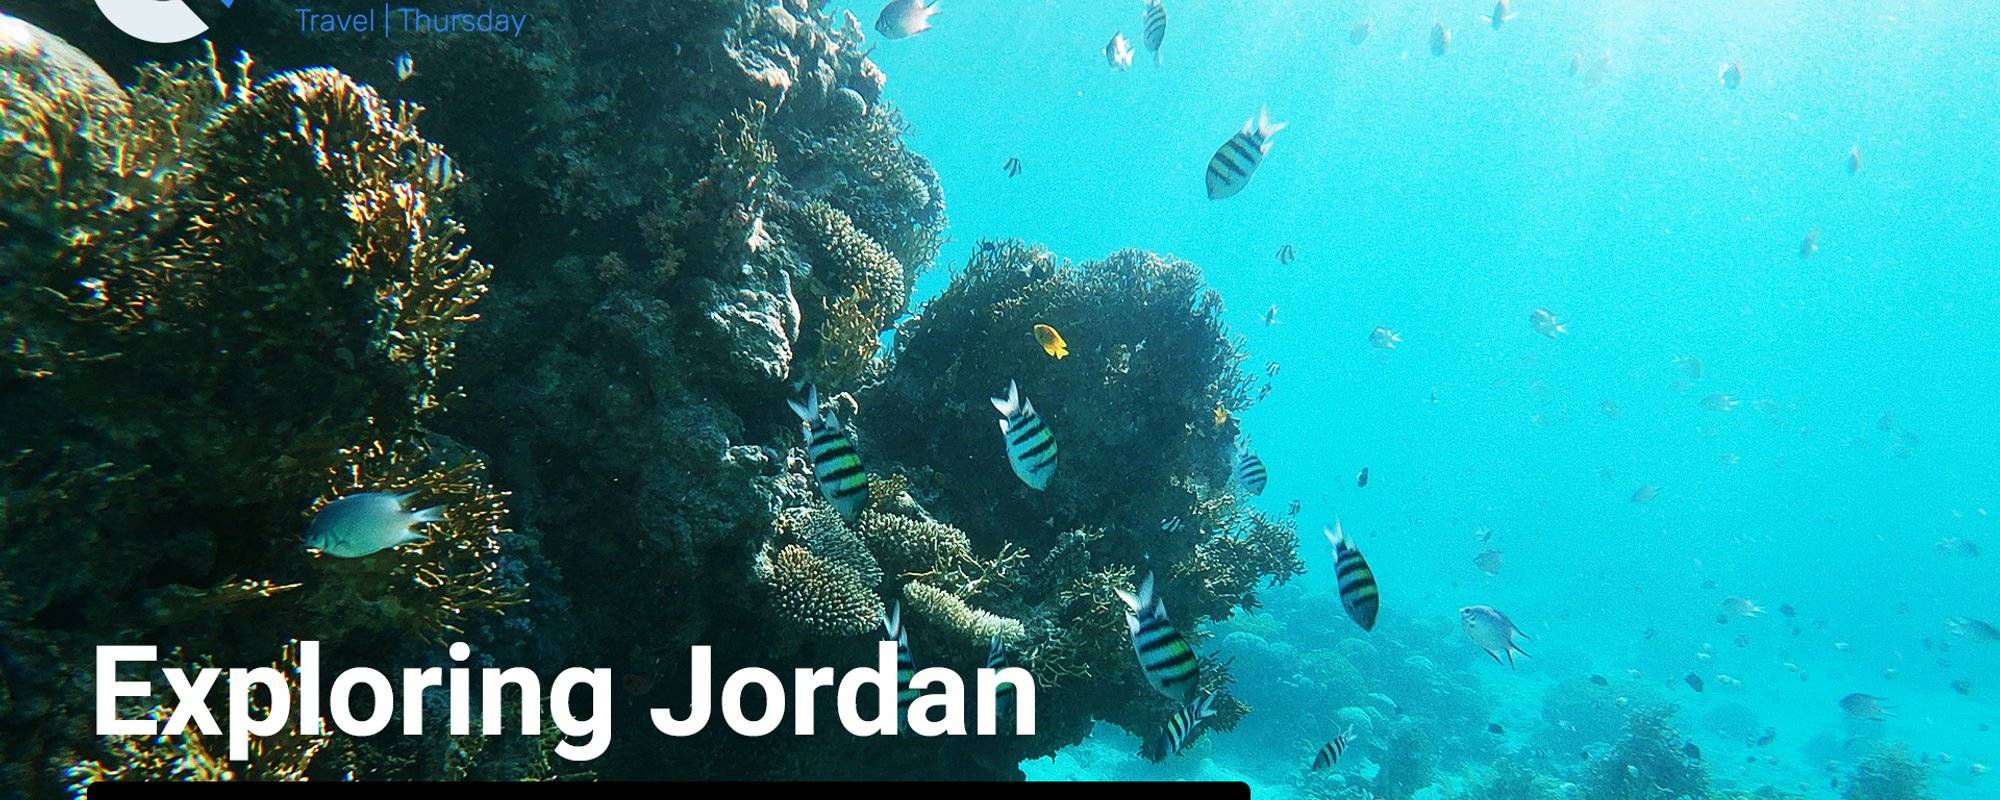 Exploring Red Sea port Aqaba, Jordan: Beneath the Water & the Present